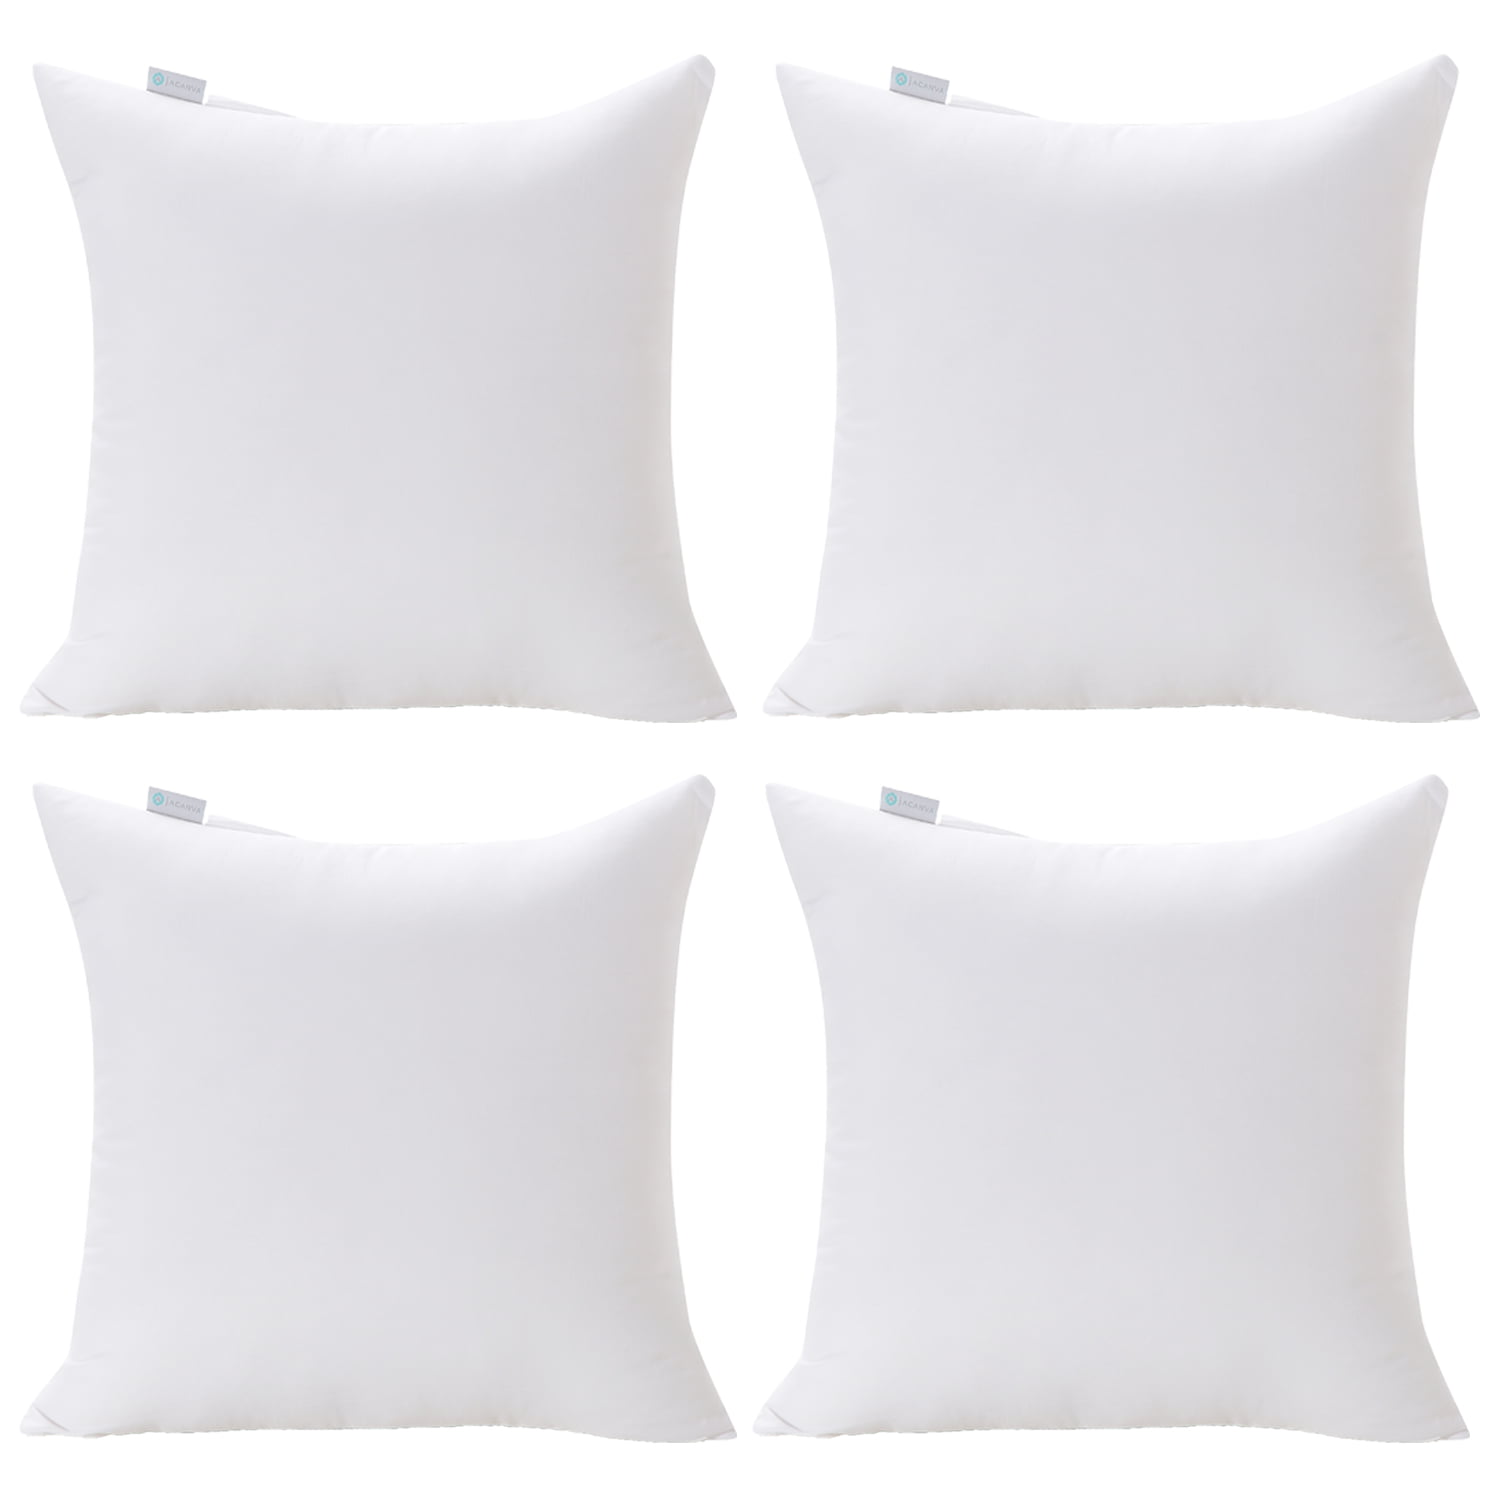 Fennco Styles Polyester Fiber White Pillow Insert 16 Round Made in USA